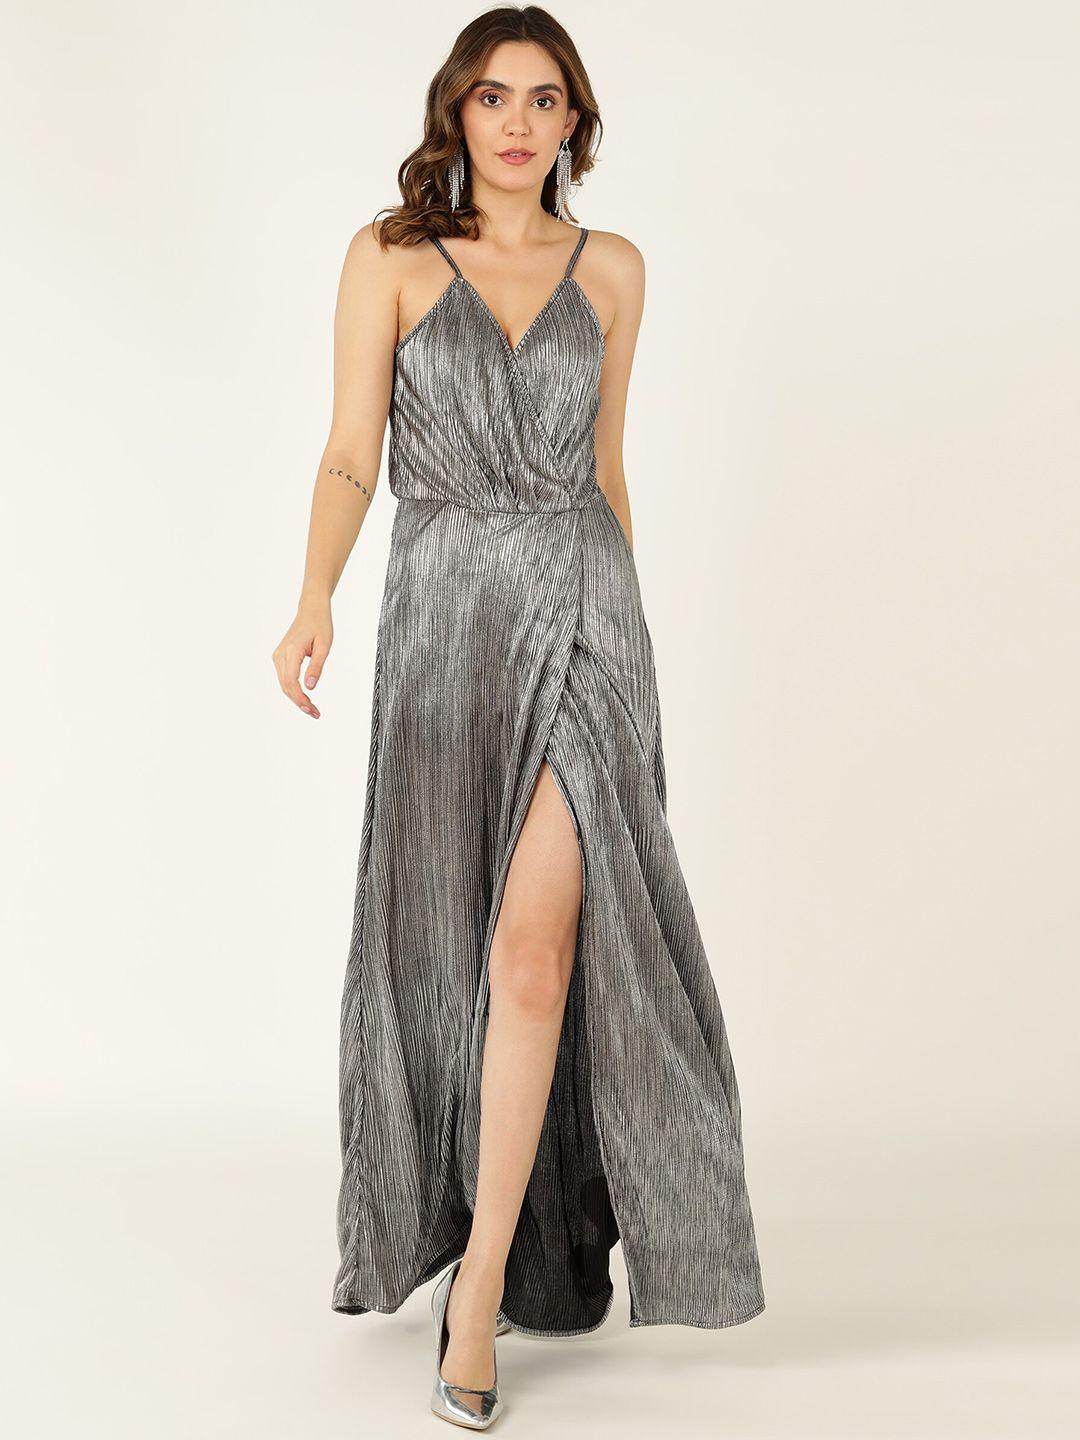 dodo & moa black & silver-toned embellished maxi dress